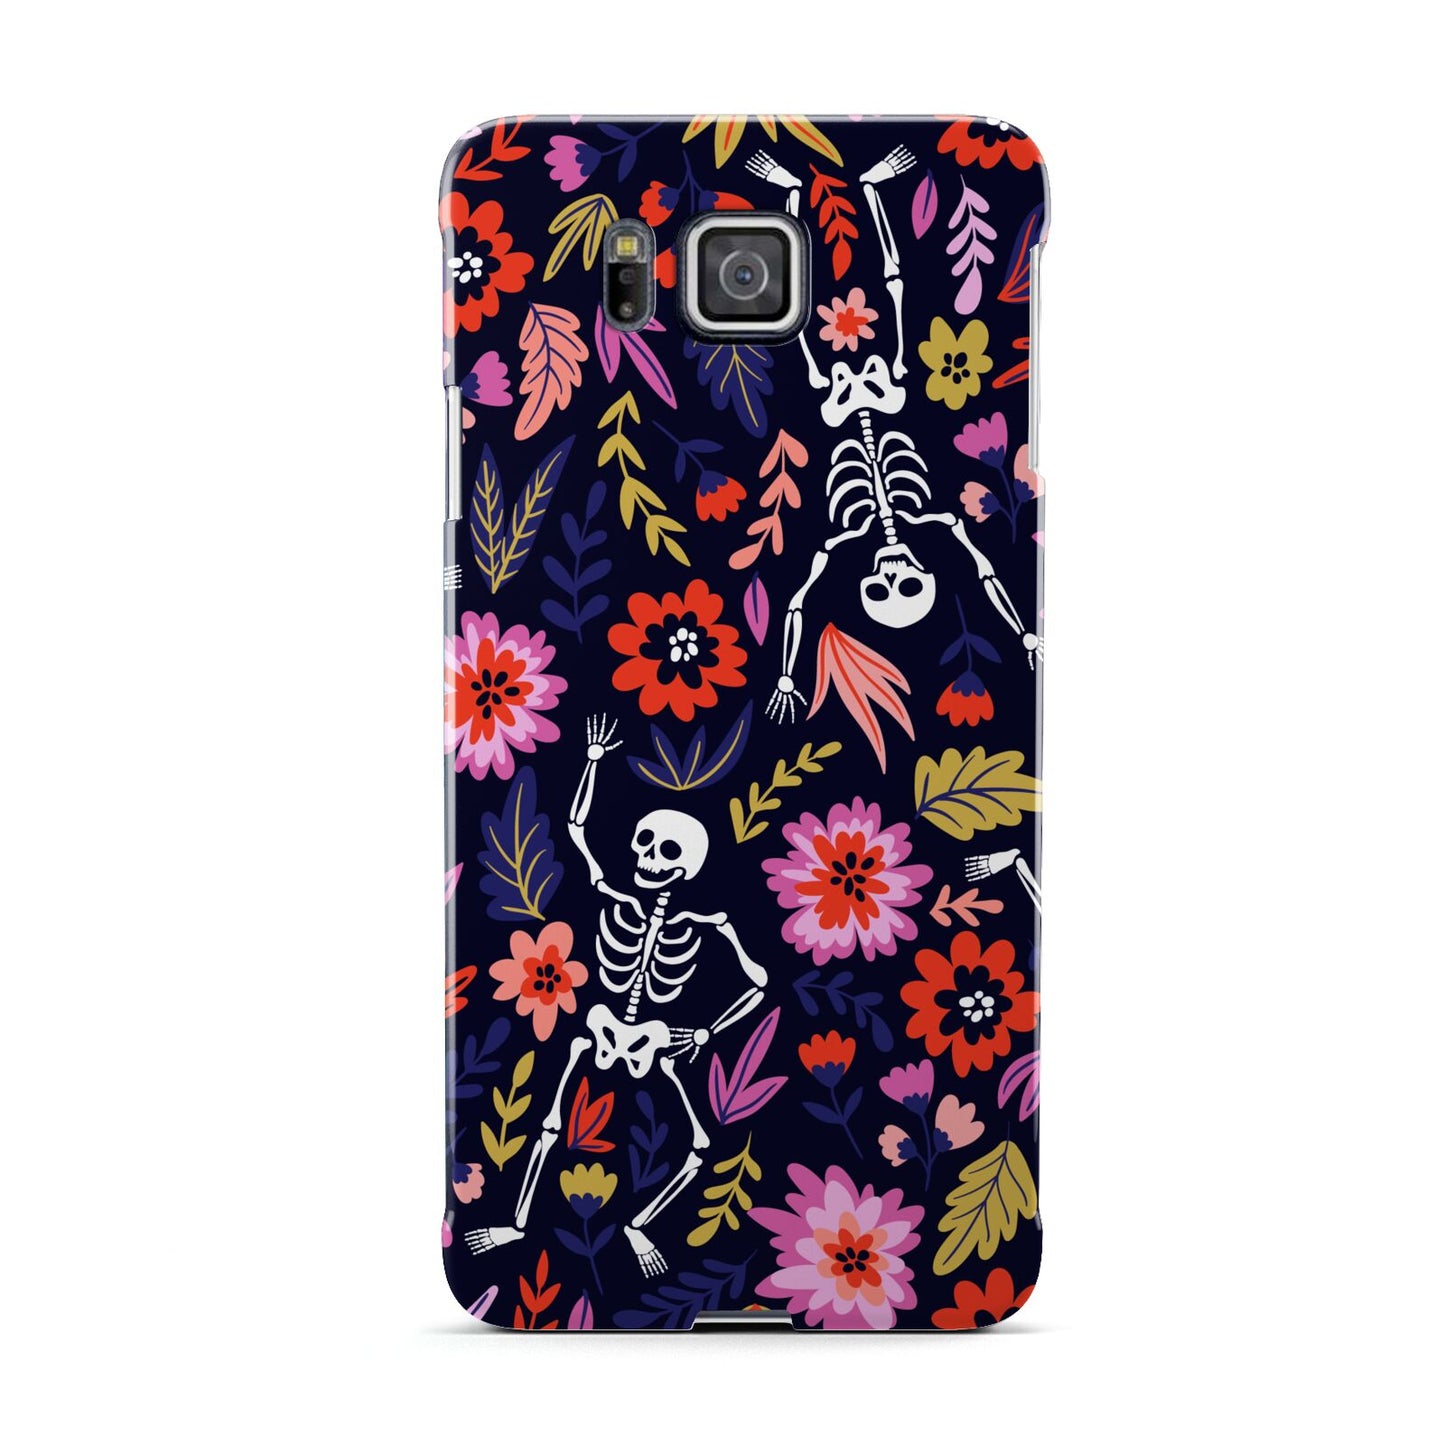 Floral Skeleton Samsung Galaxy Alpha Case